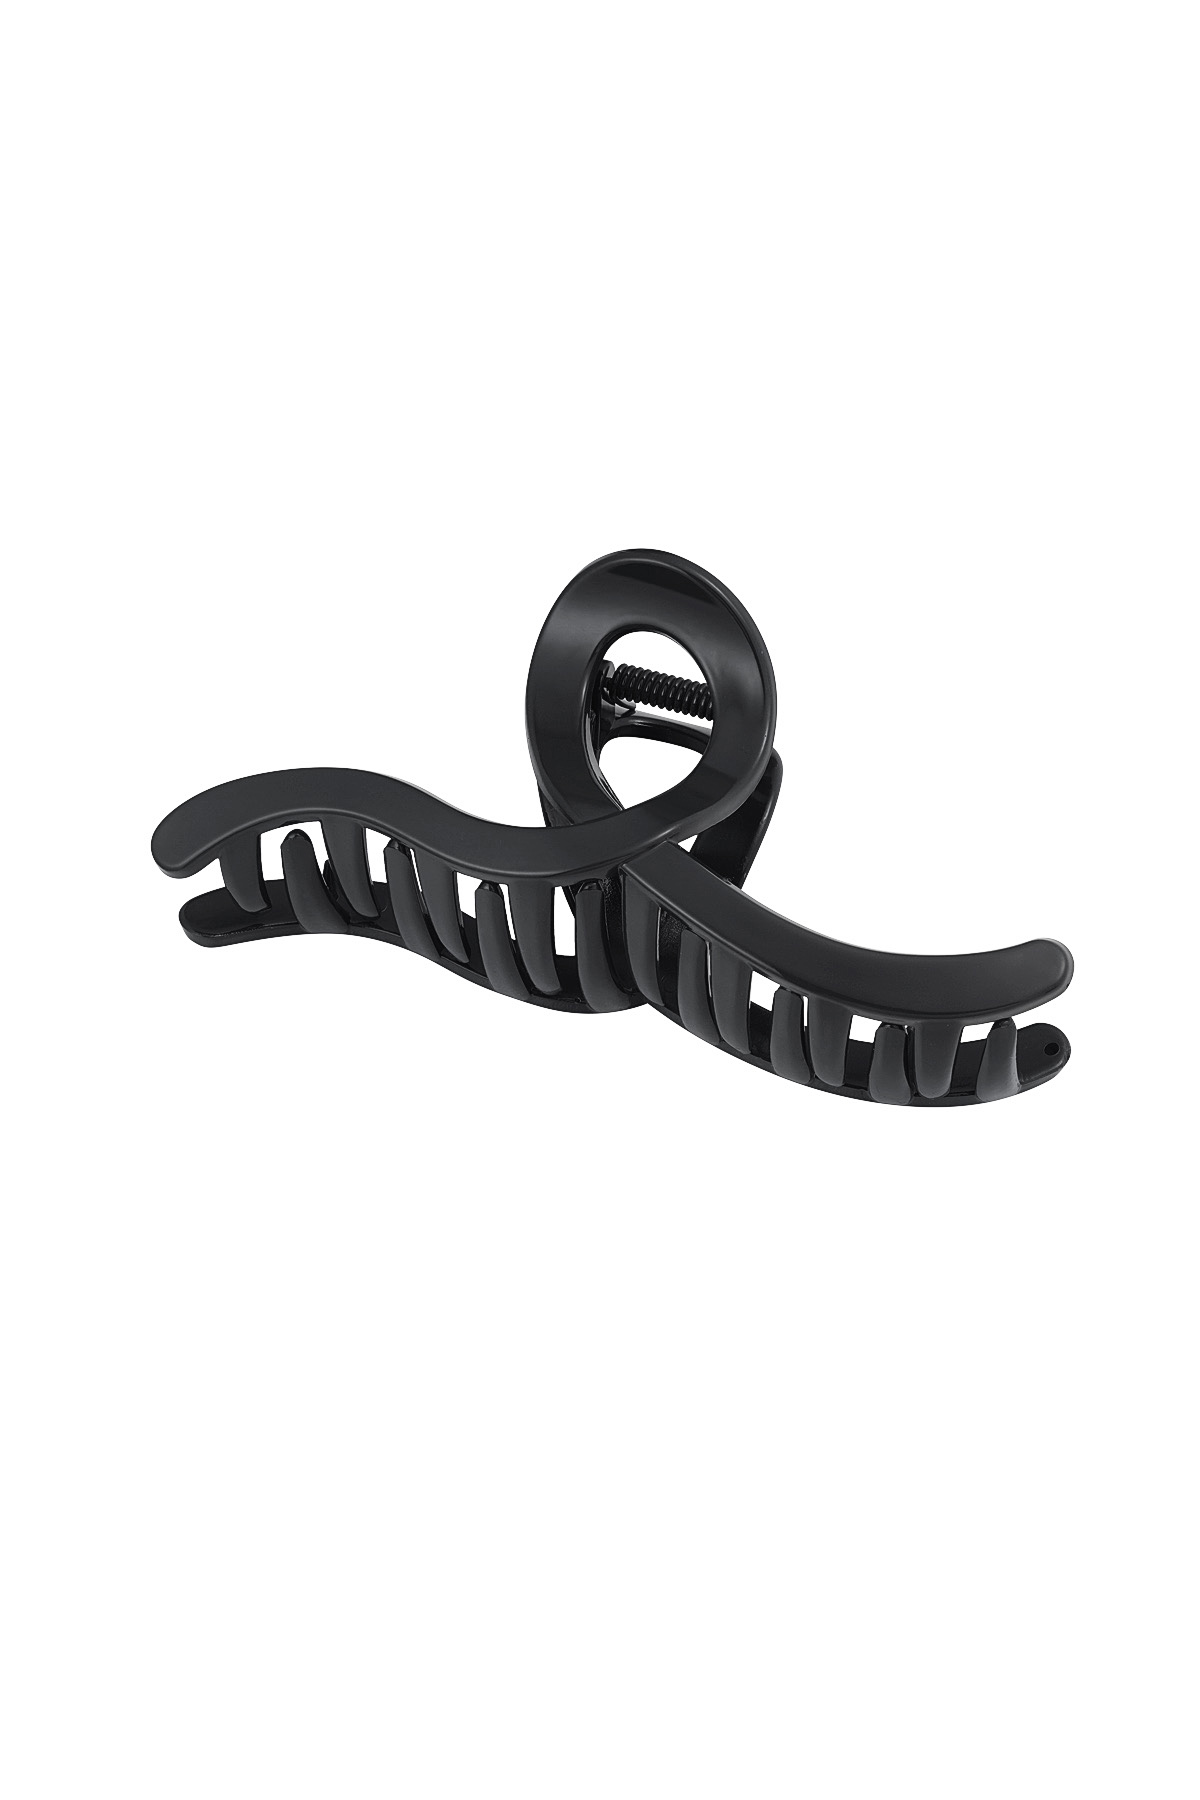 Hair clip swing - black h5 